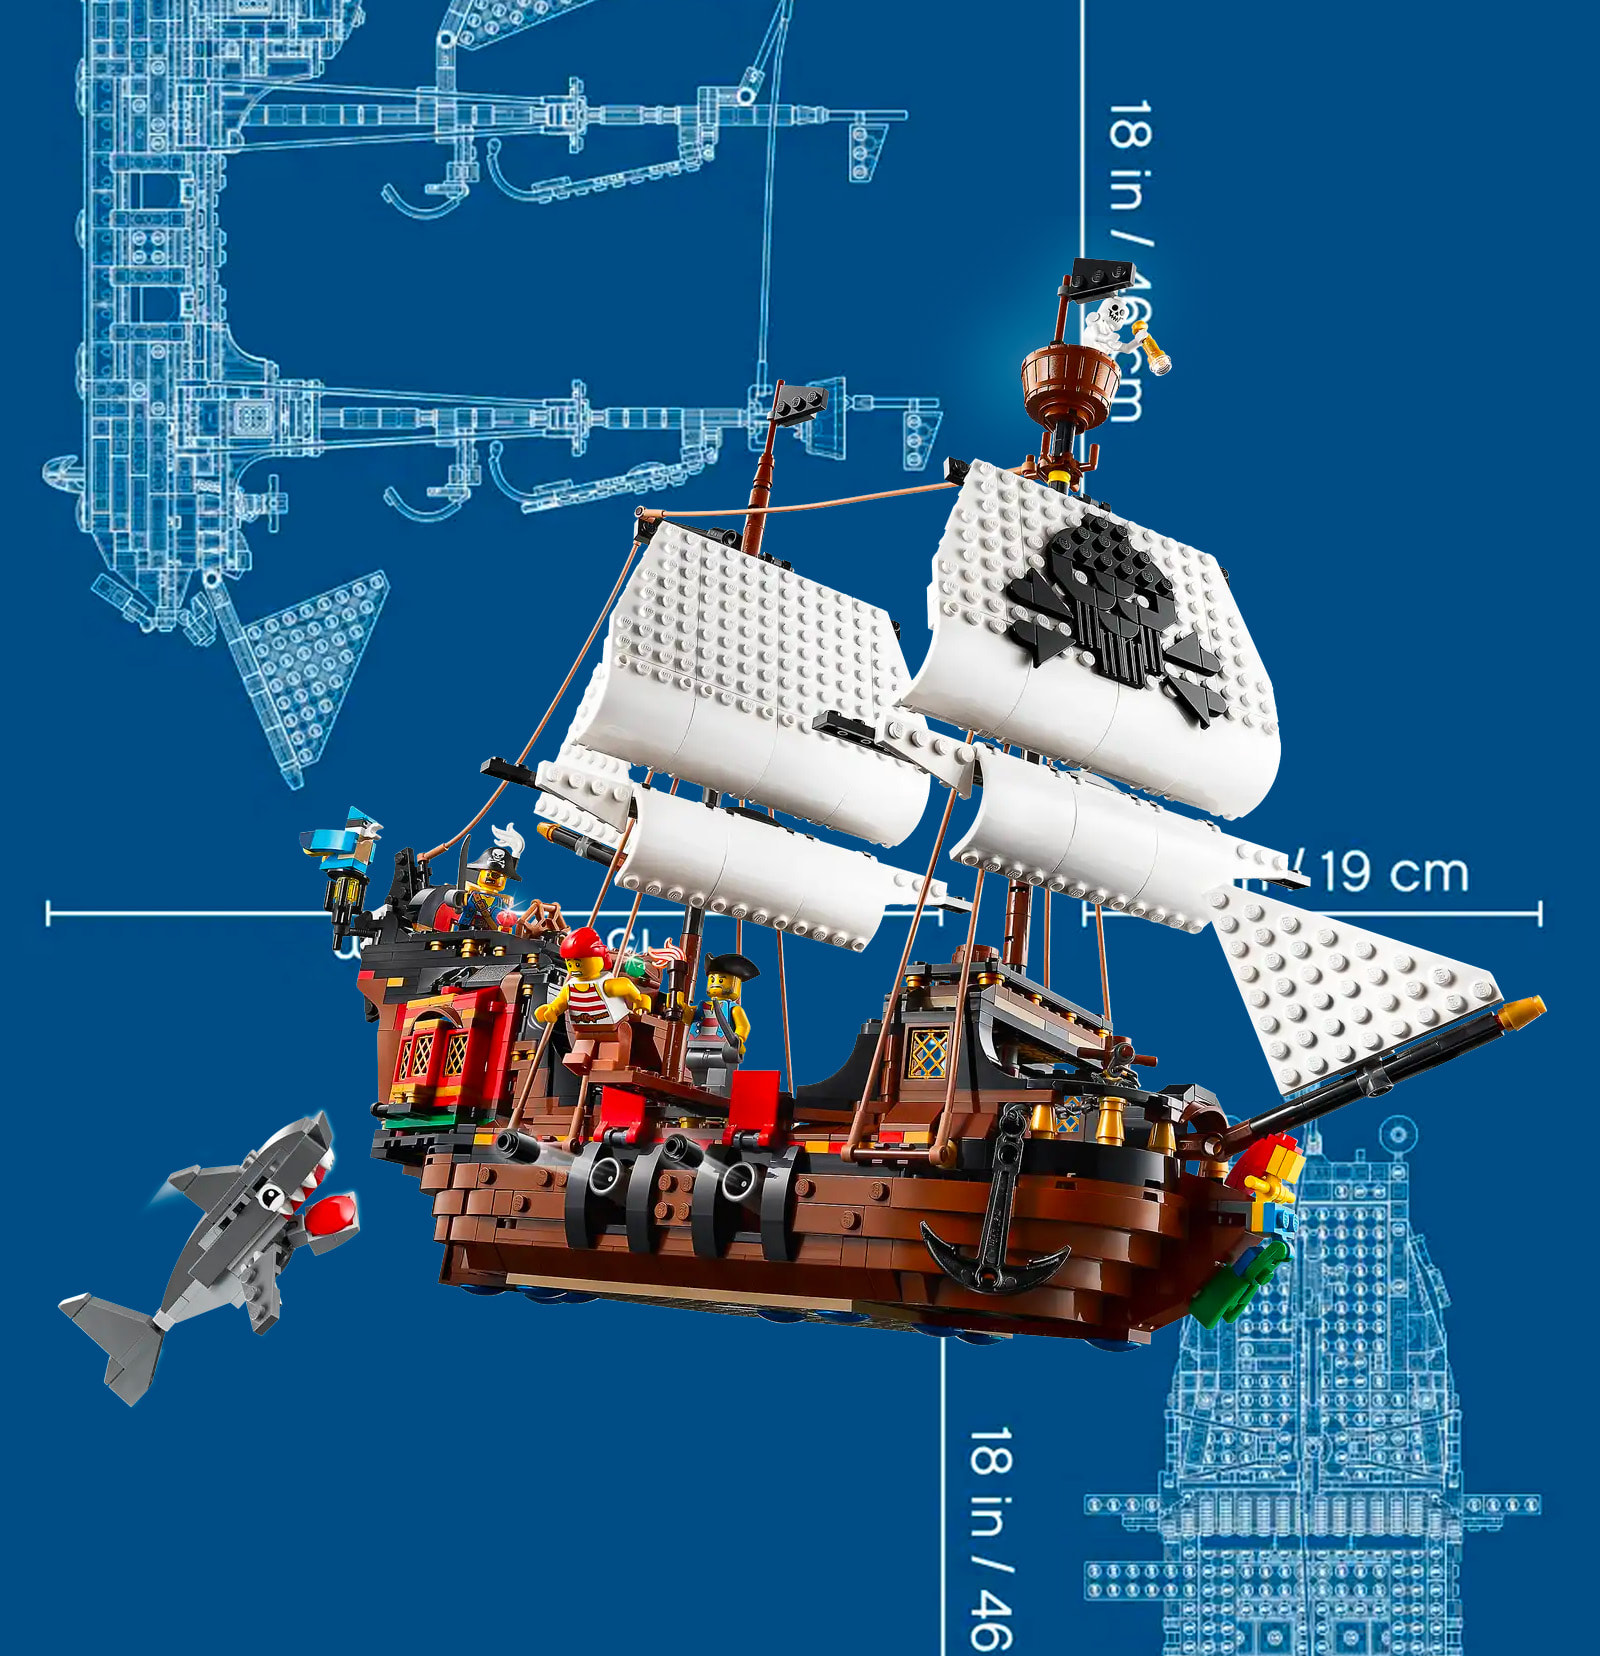 Ship AND bonus LEGO architectural sets!